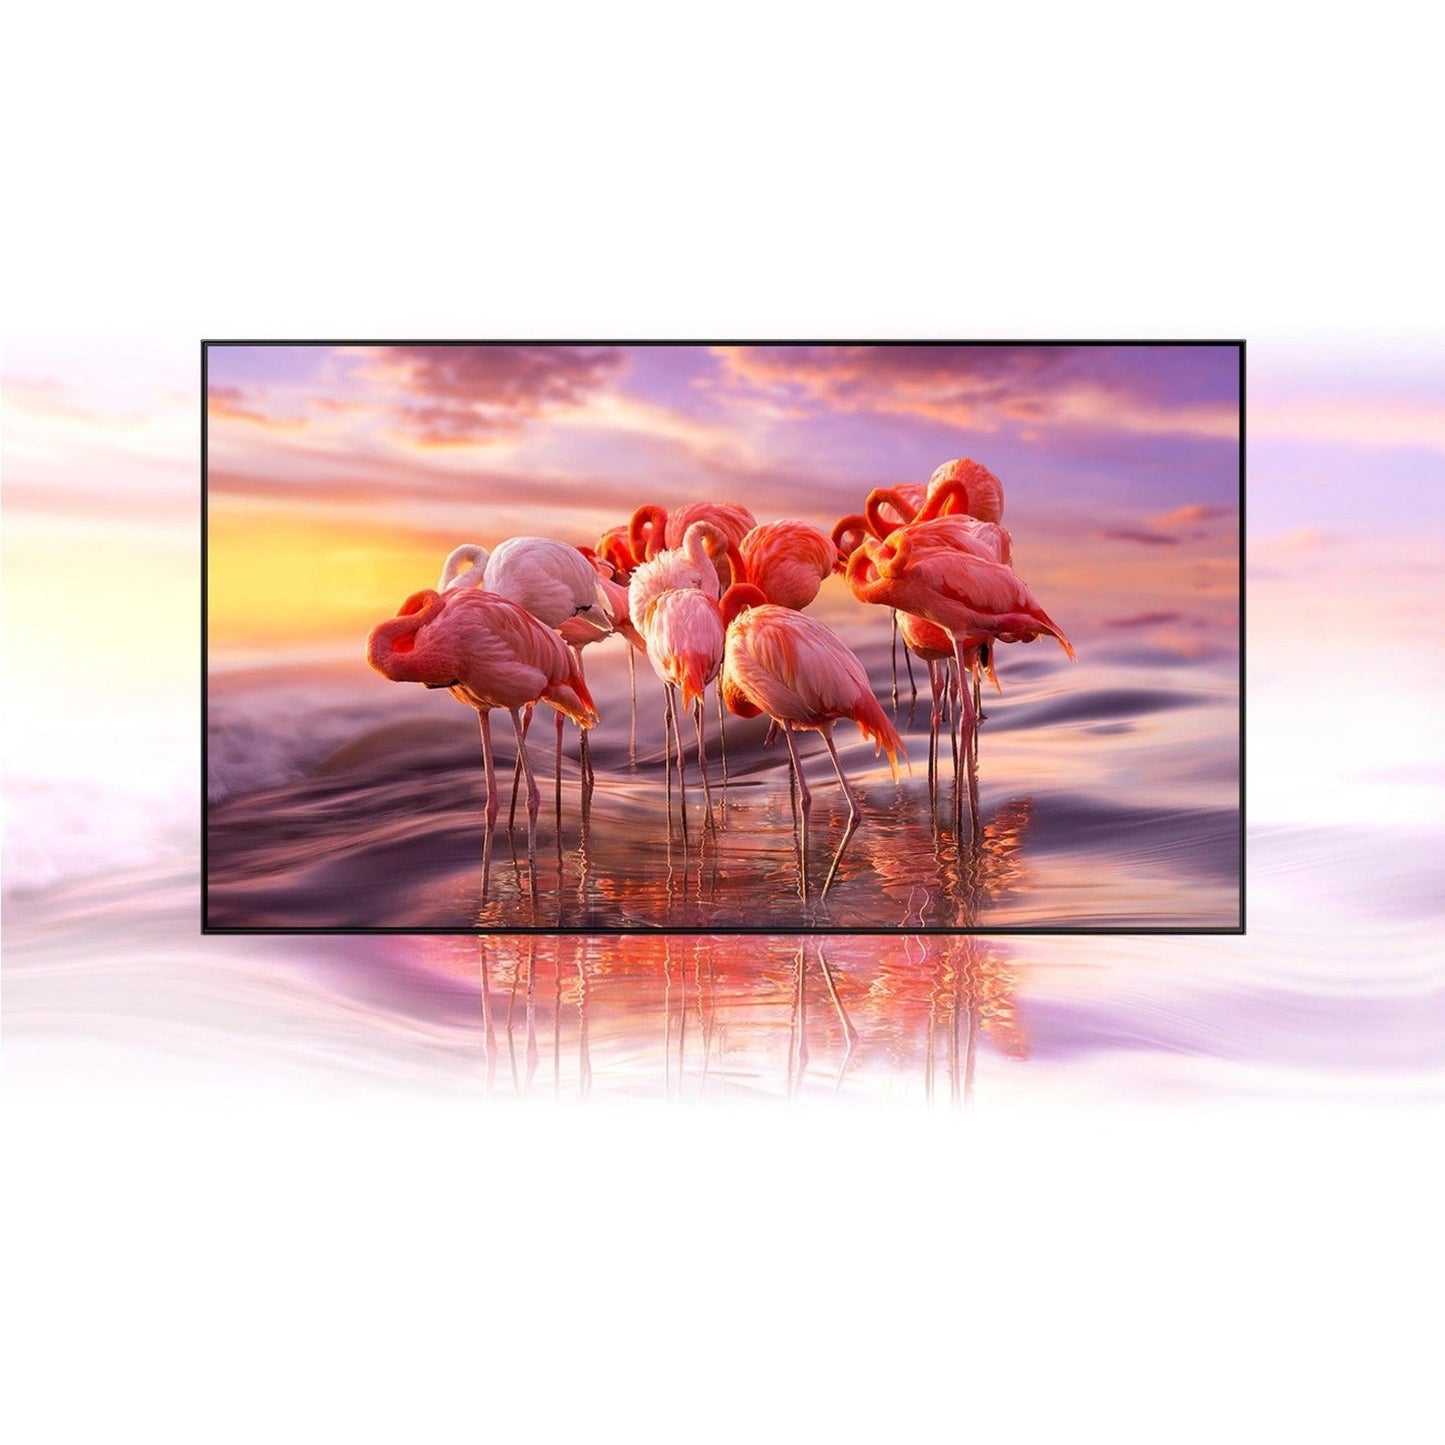 Samsung Q80B QN75Q80BAF 74.5" Smart LED-LCD TV - 4K UHDTV - Titan Black Sand Black